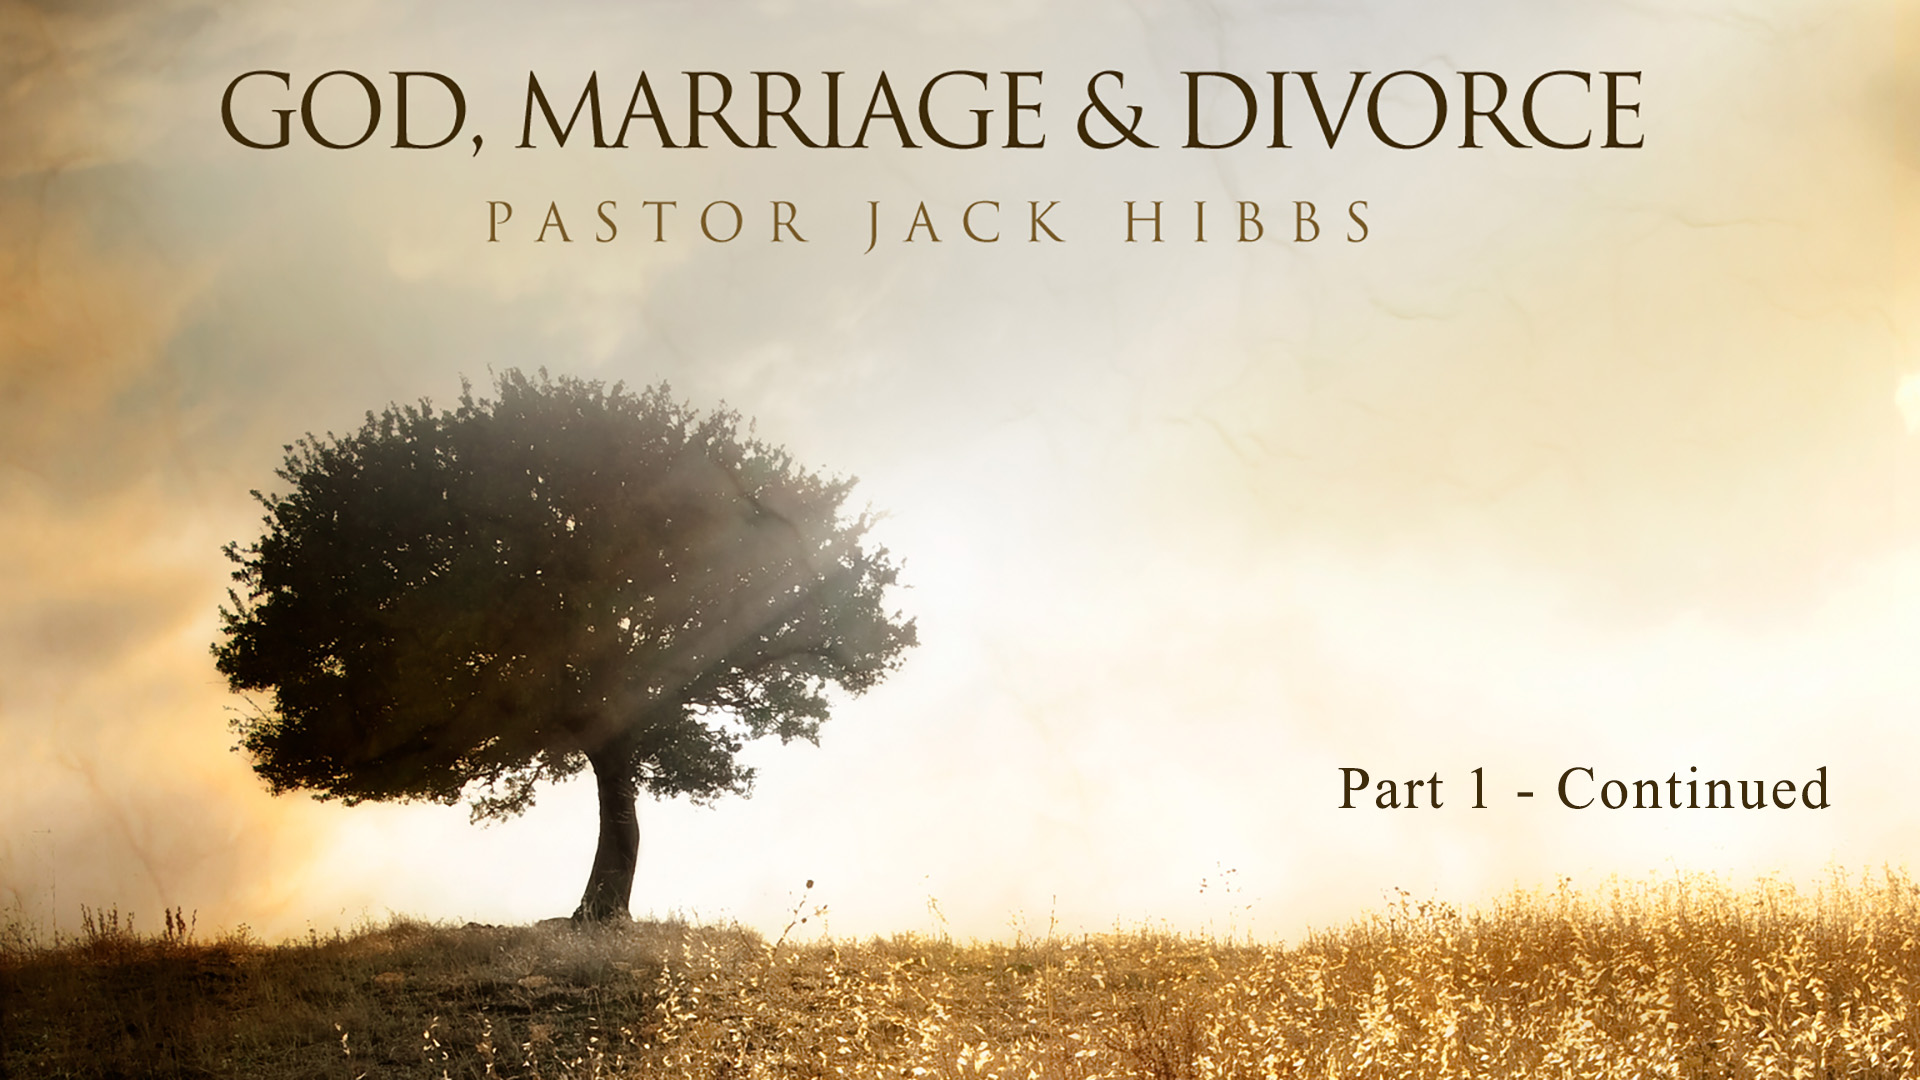 God, Marriage & Divorce – Part 1 Continued